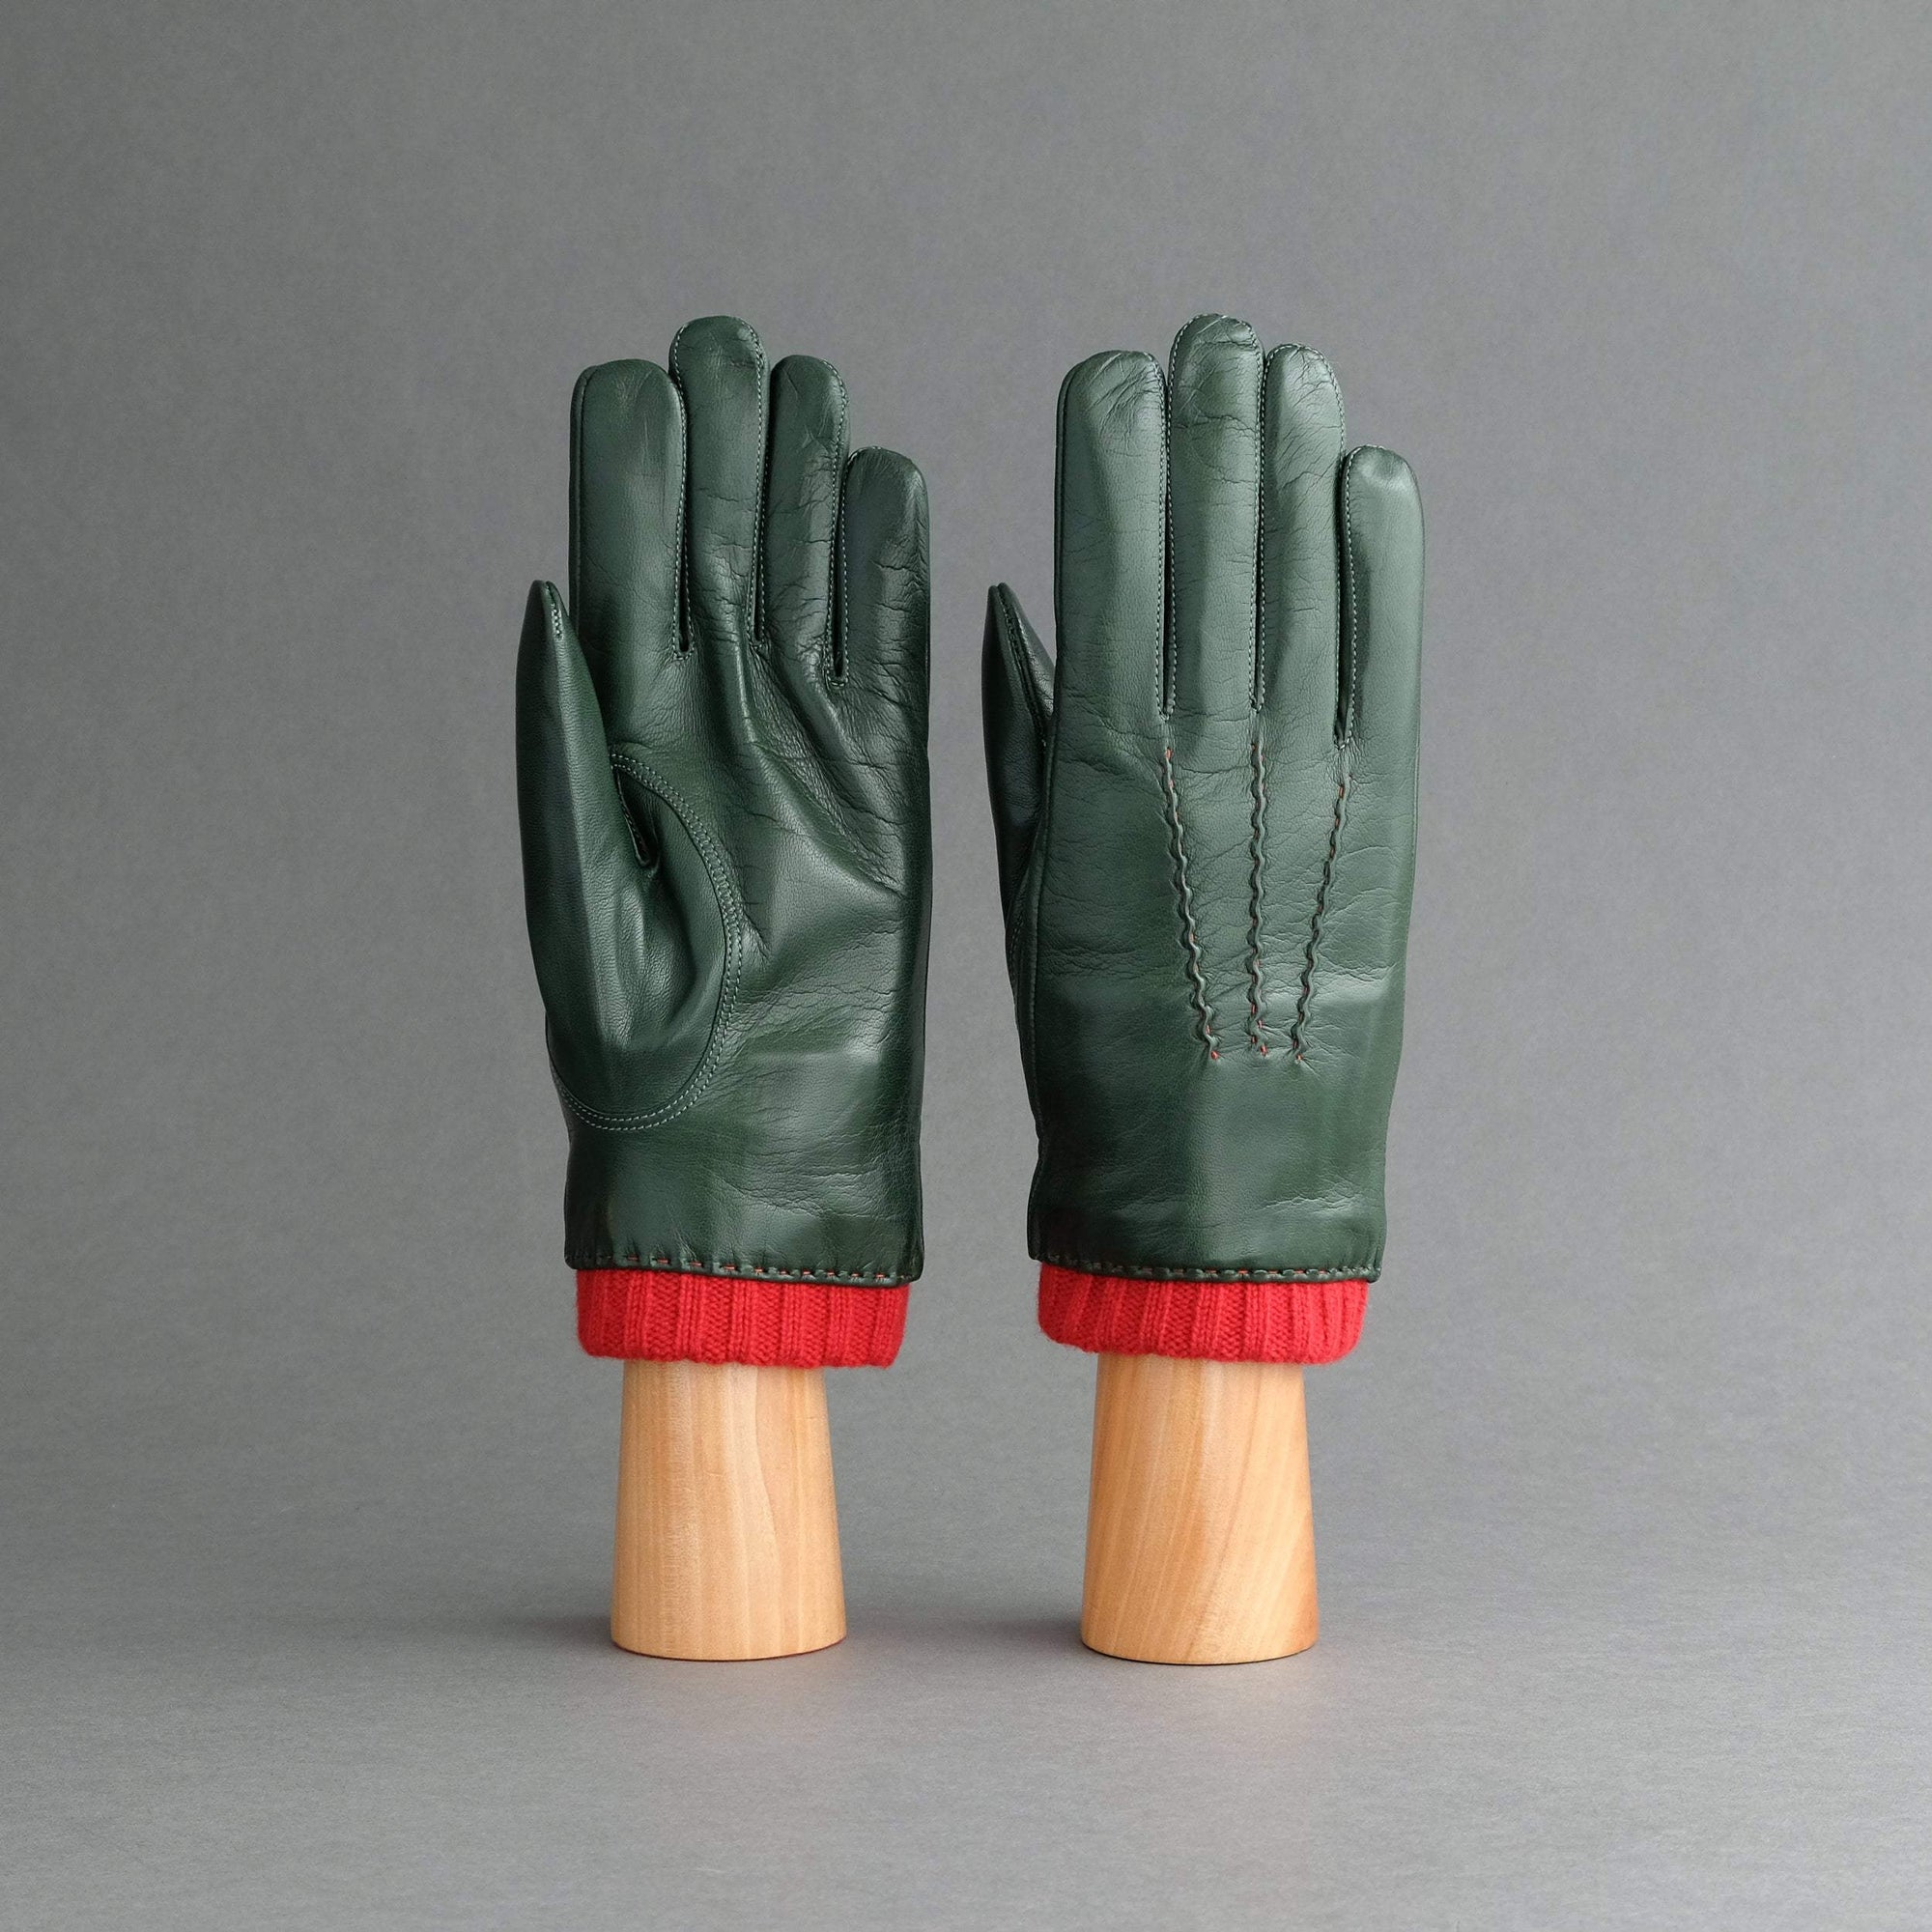 Gentlemen's Gloves from Green Loden Hair Sheep Nappa Lined With Cashmere - TR Handschuhe Wien - Thomas Riemer Handmade Gloves